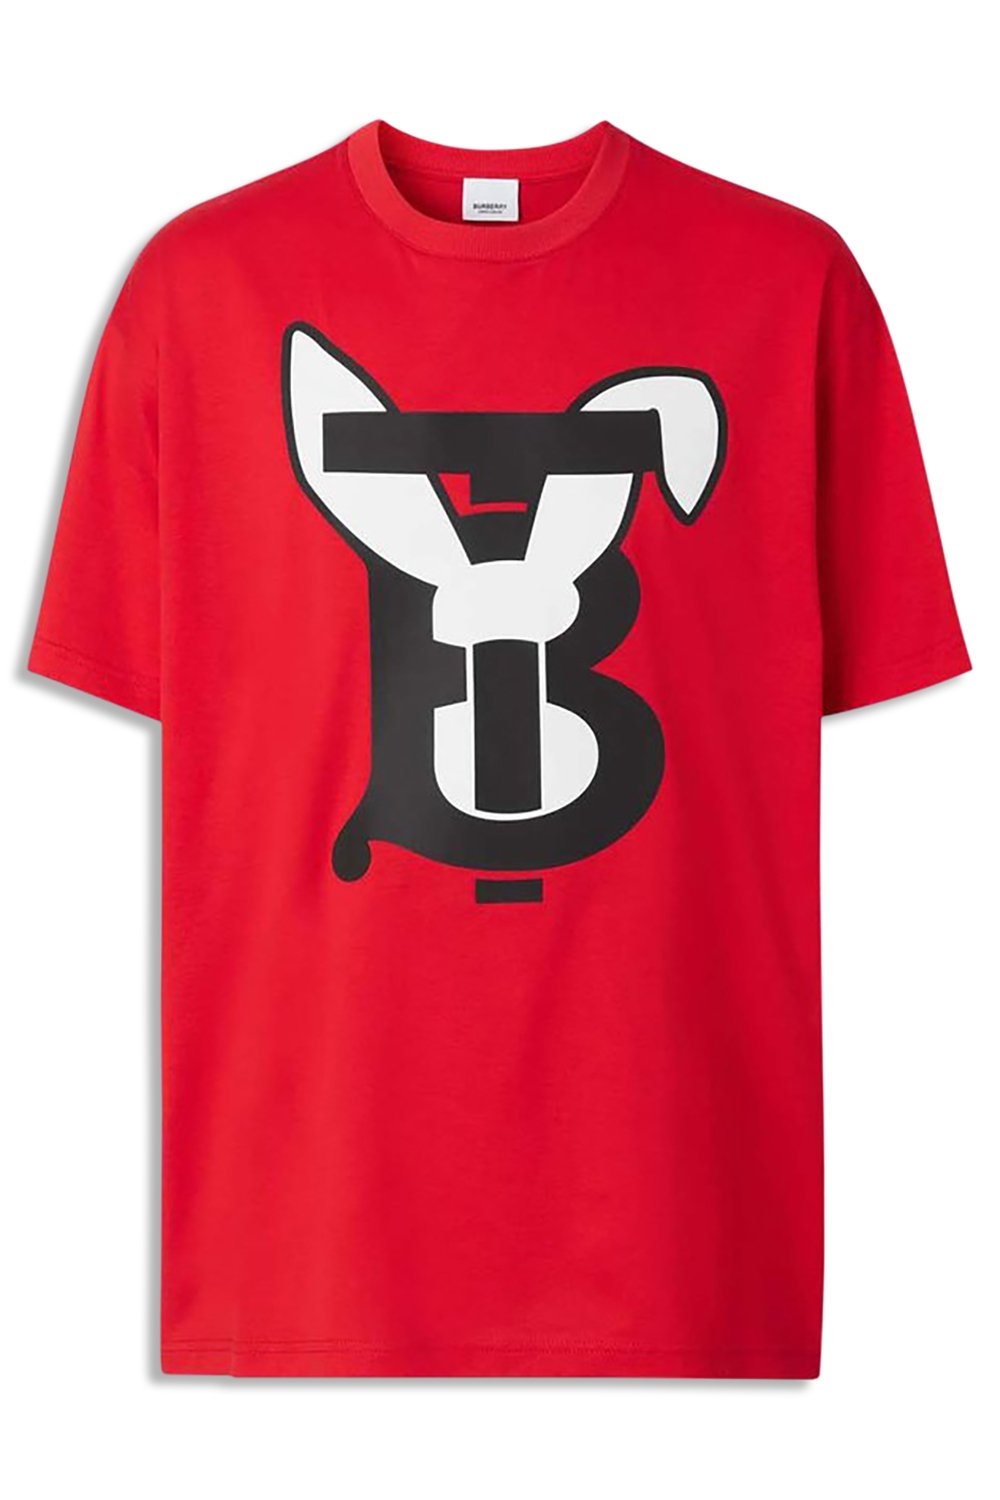 Men's Red Burberry Rabbit Short Sleeve T-Shirt